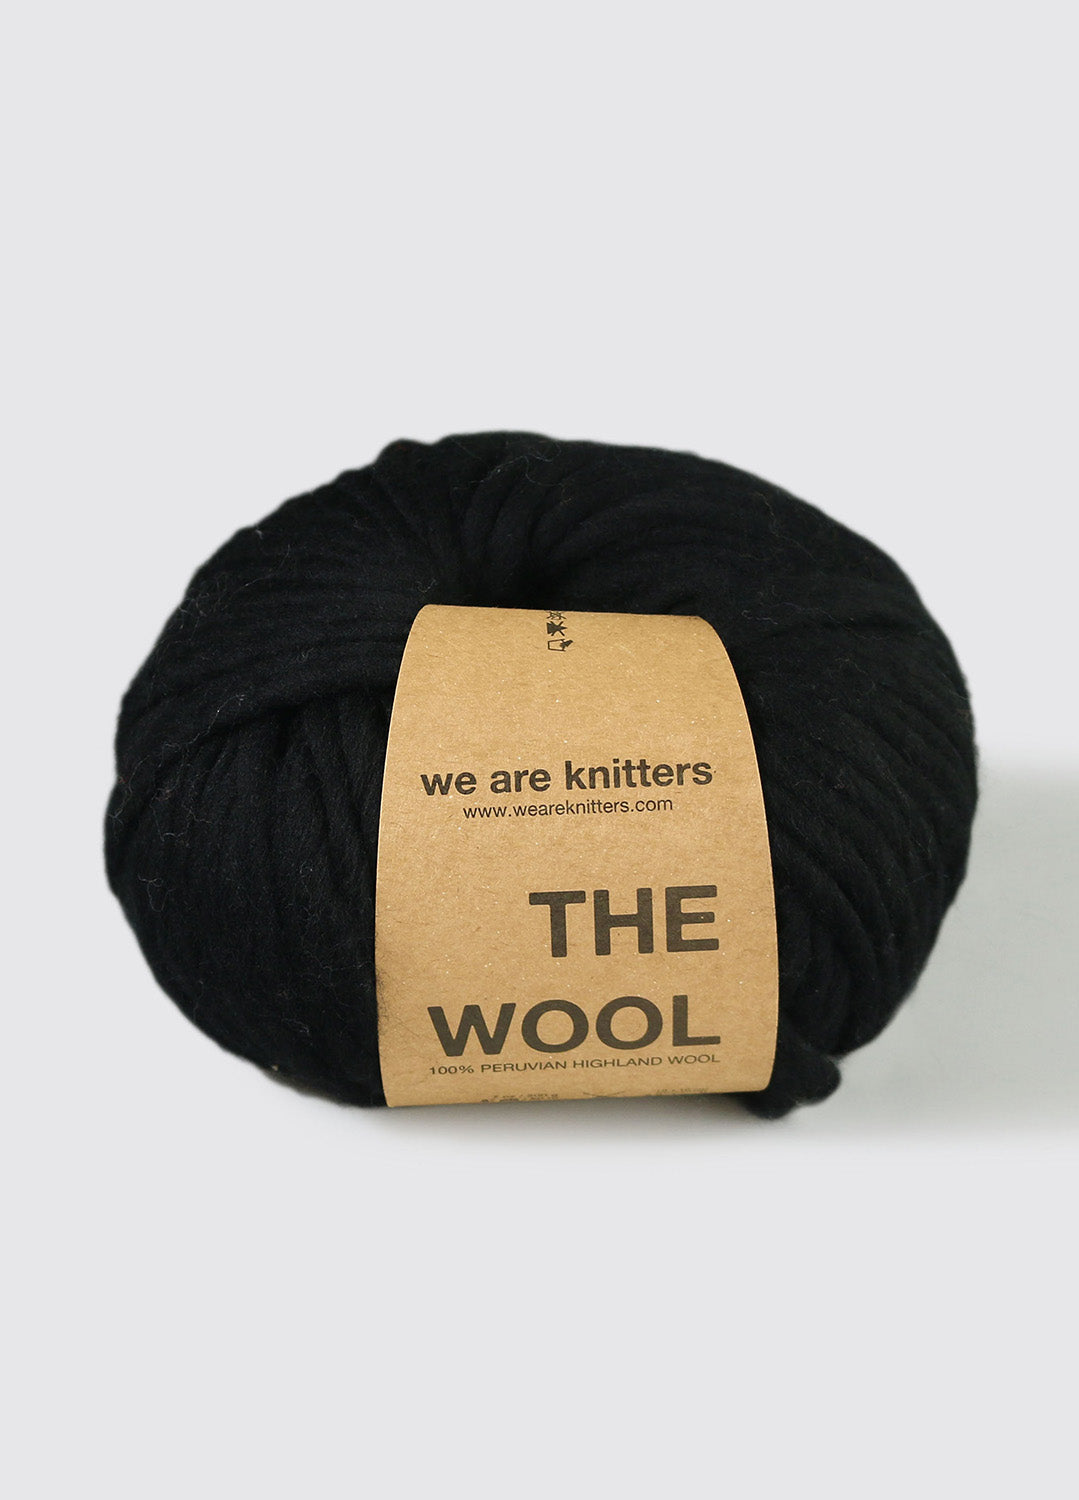 15mm Crochet Hook – We are knitters